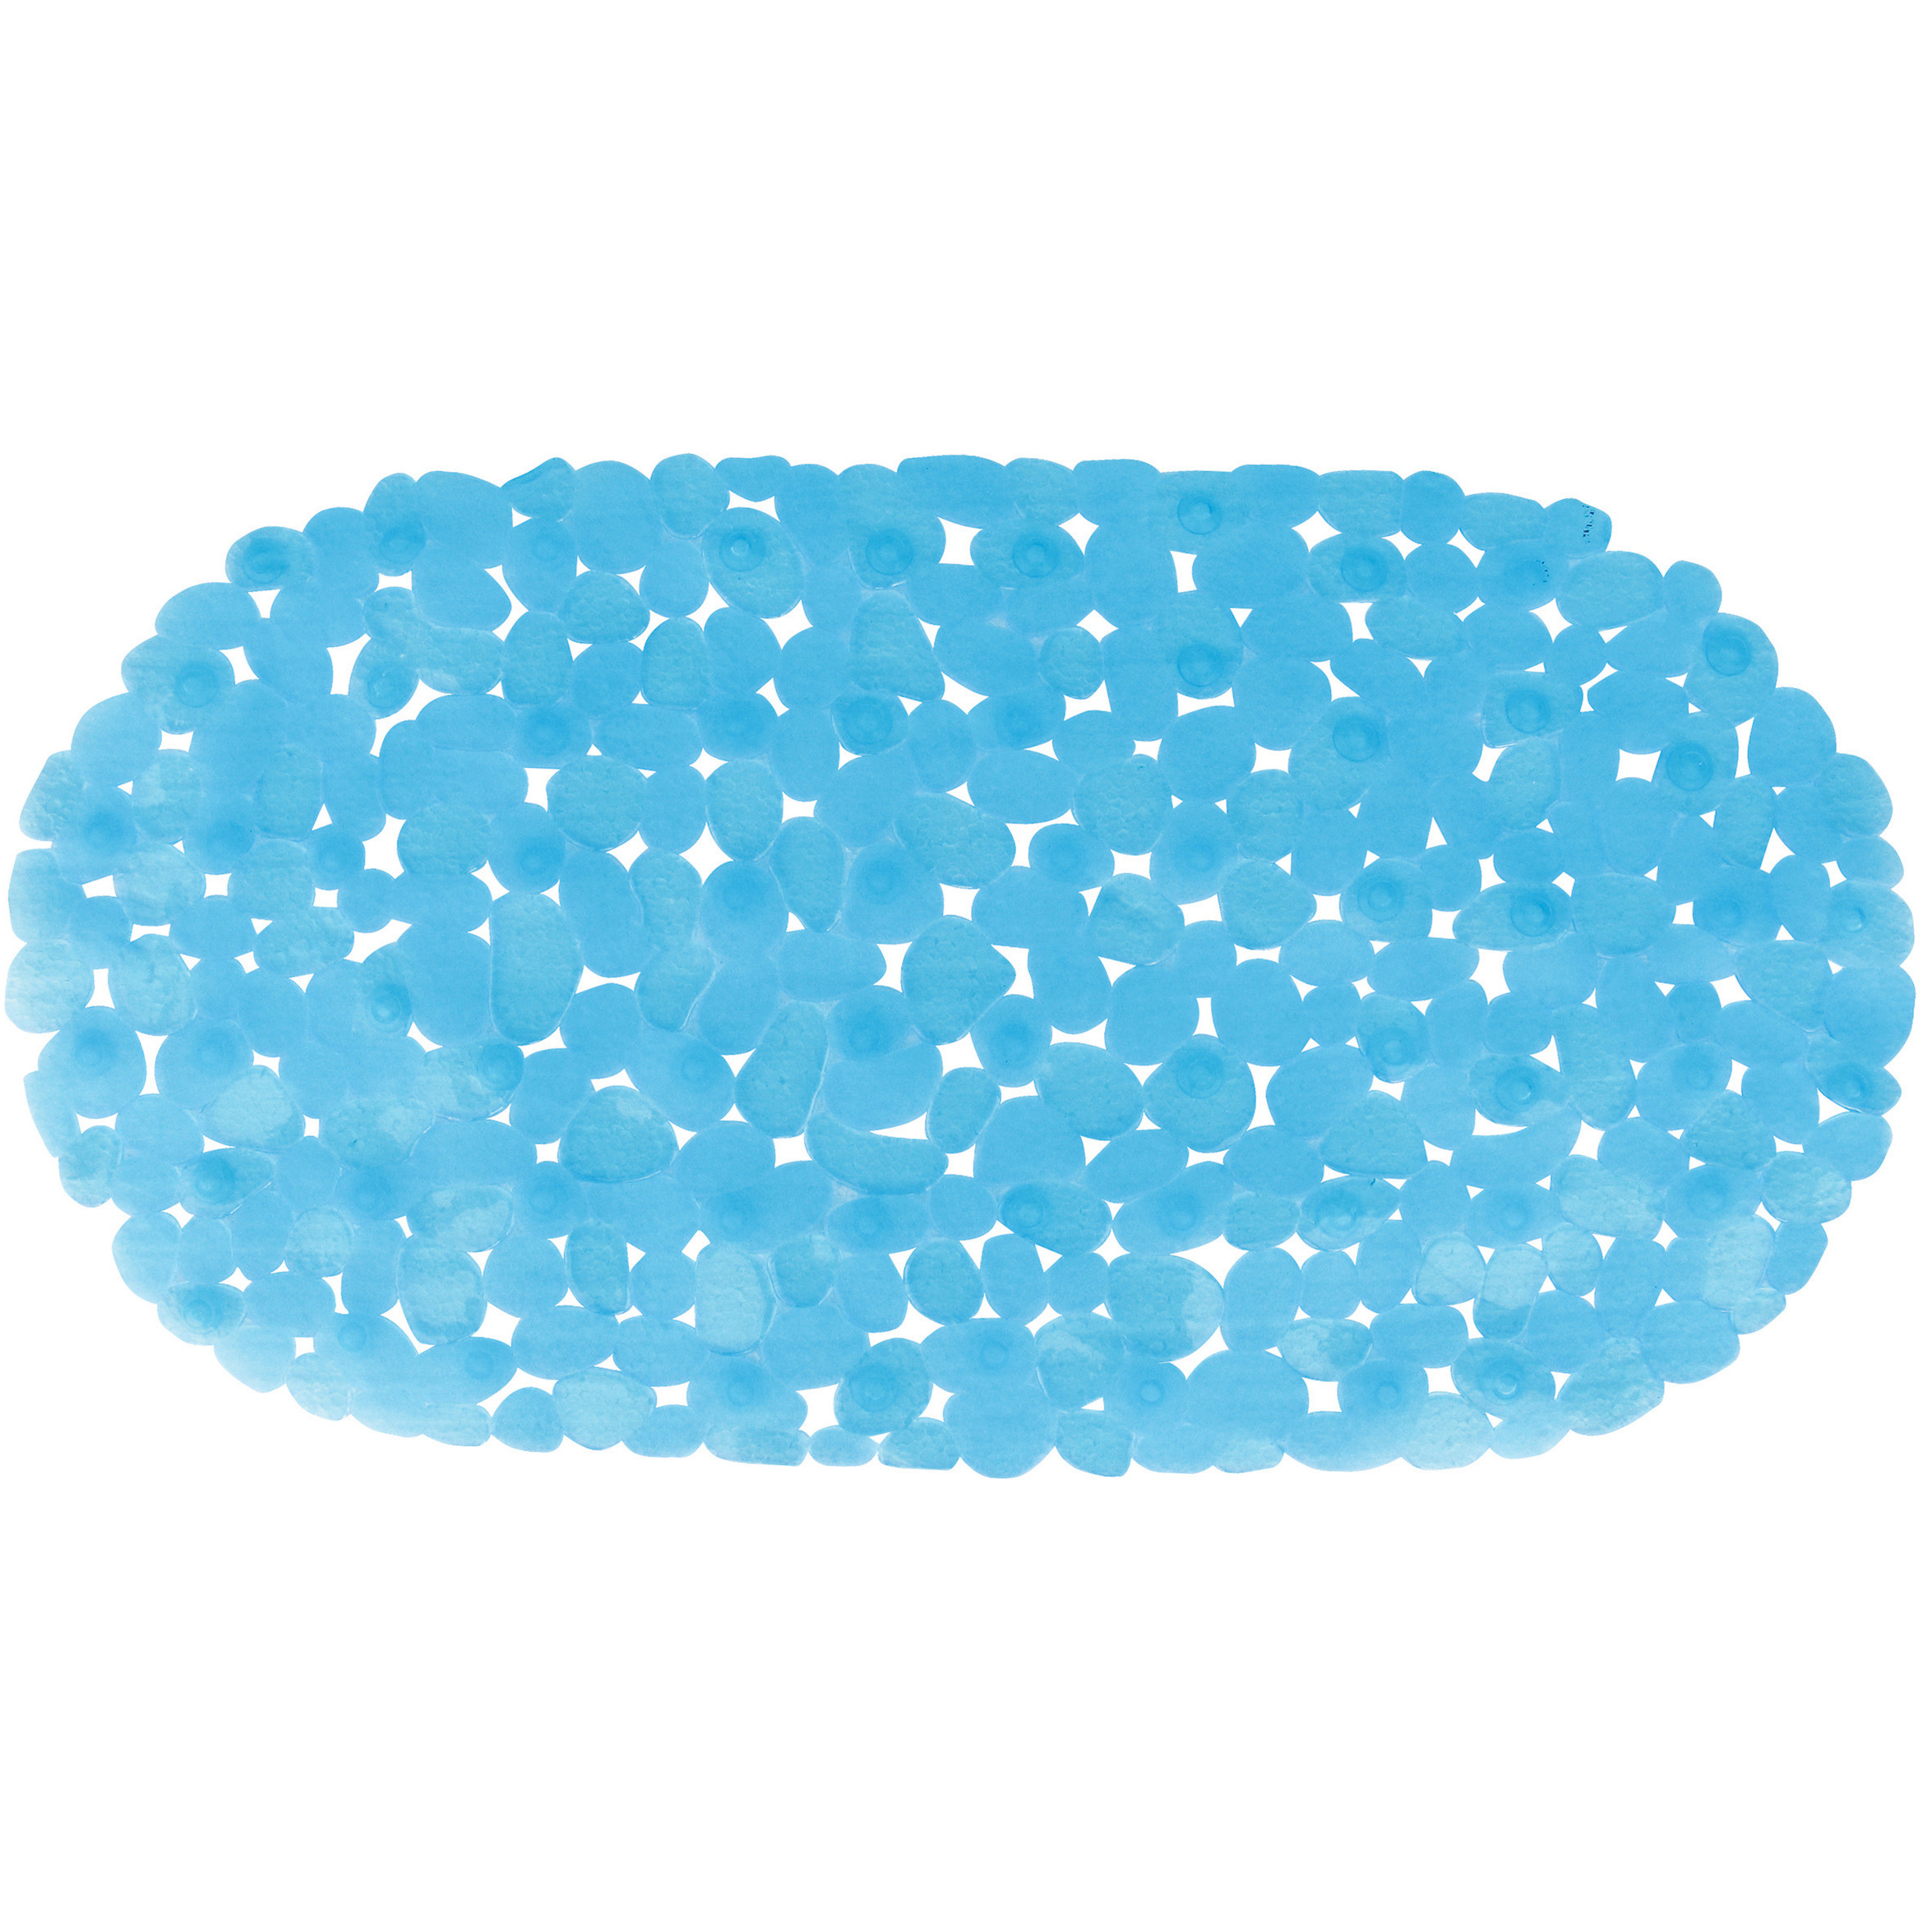 Douche-bad anti-slip mat badkamer pvc blauw 35 x 68 cm ovaal